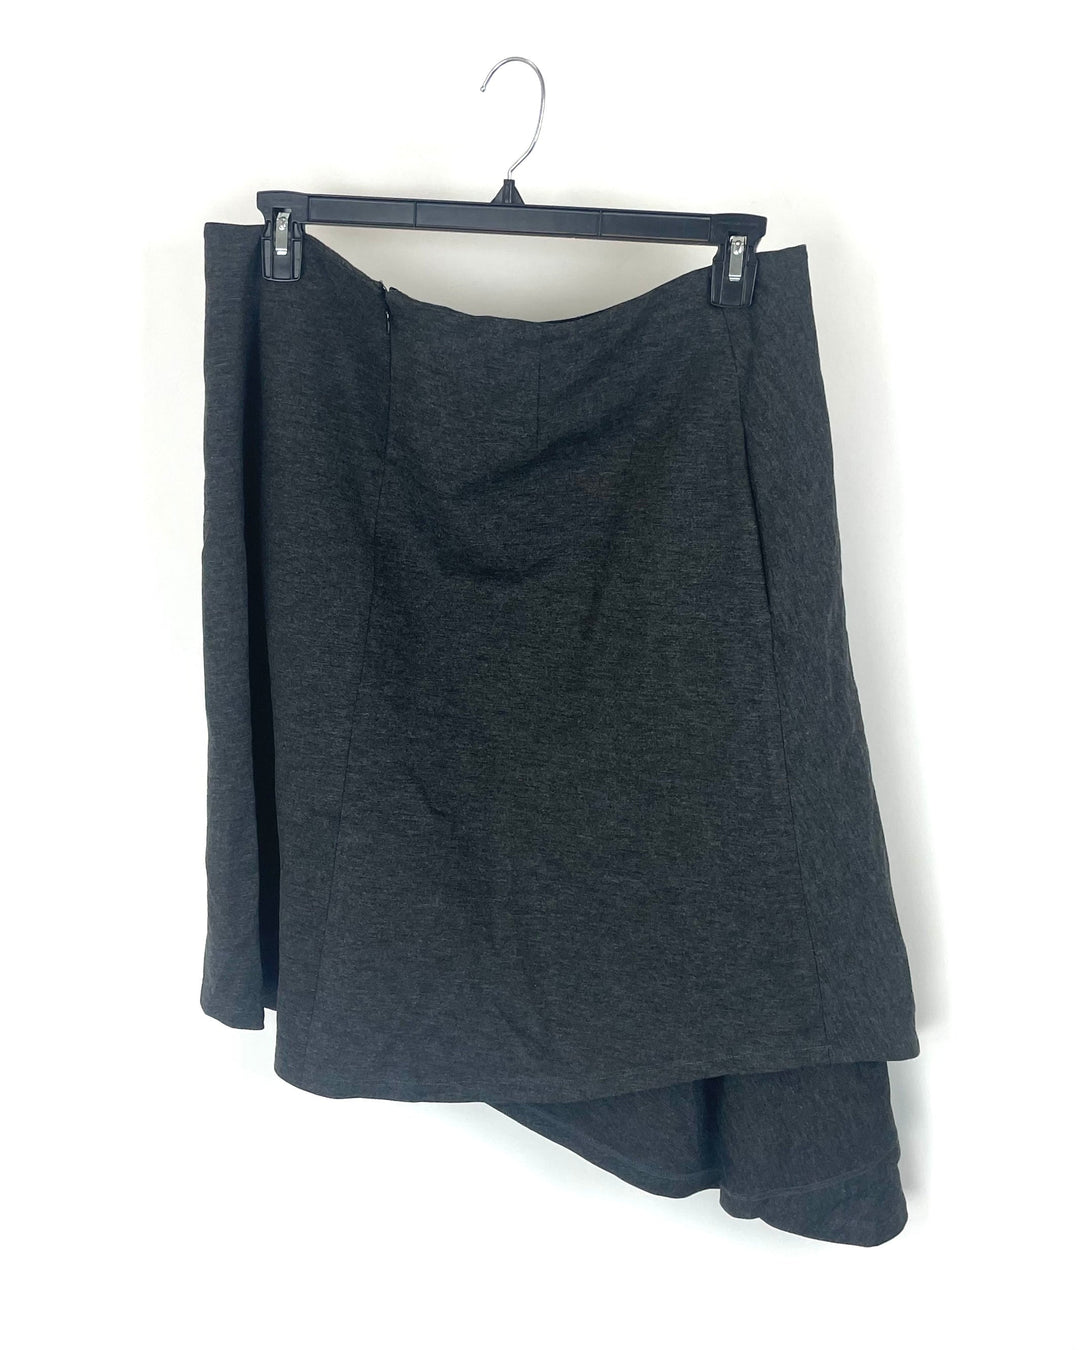 Gray Asymmetrical Skirt - Size 16, 18, 20